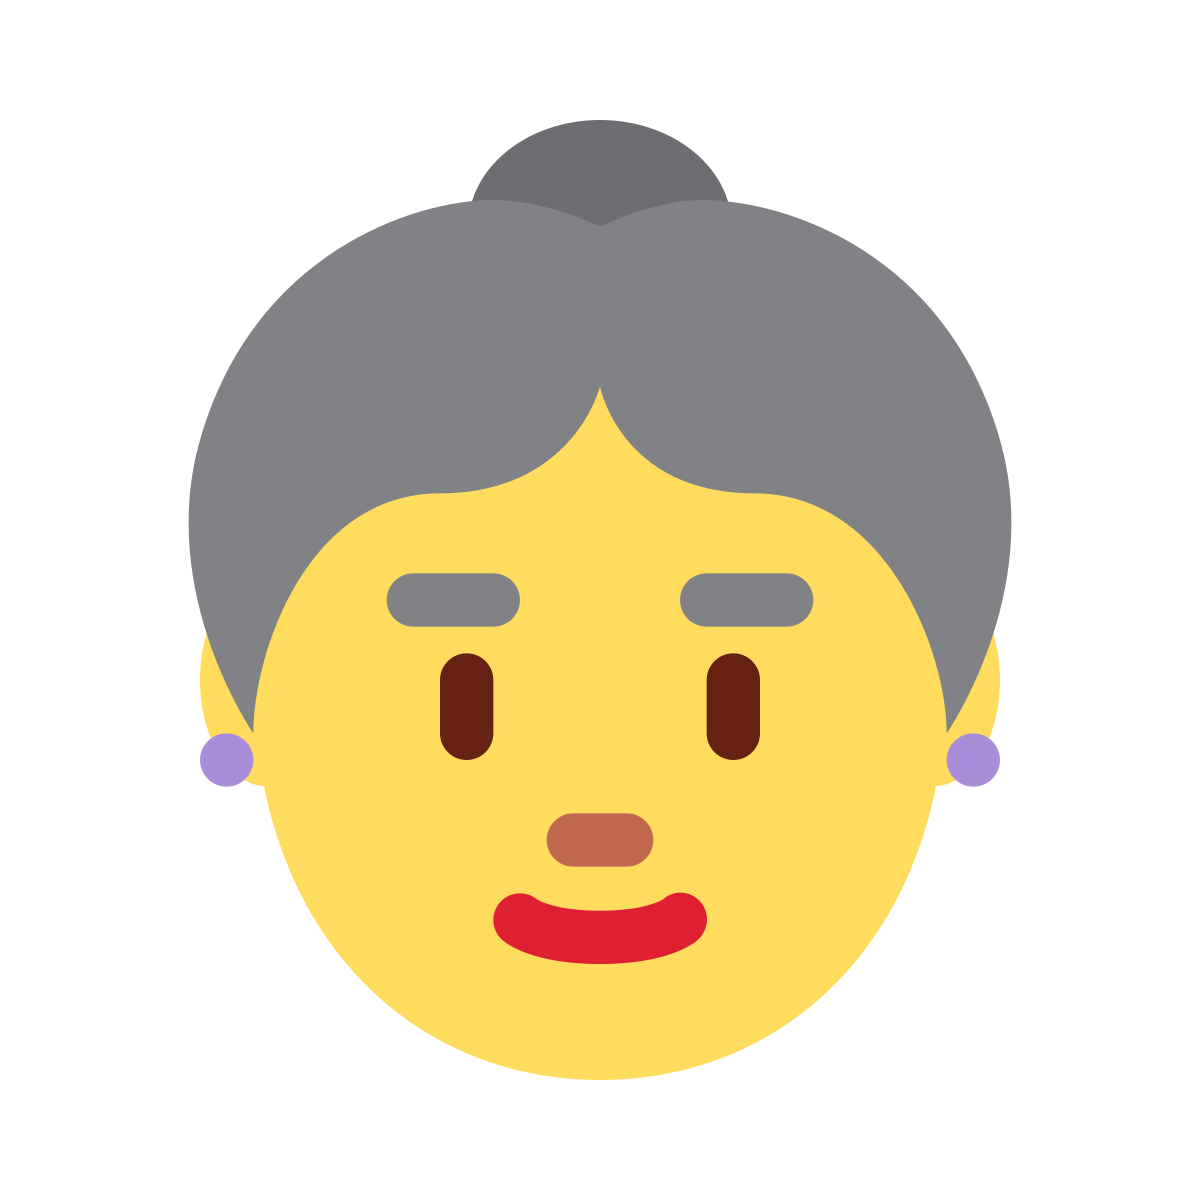 Old Woman Emoji - What Emoji 類